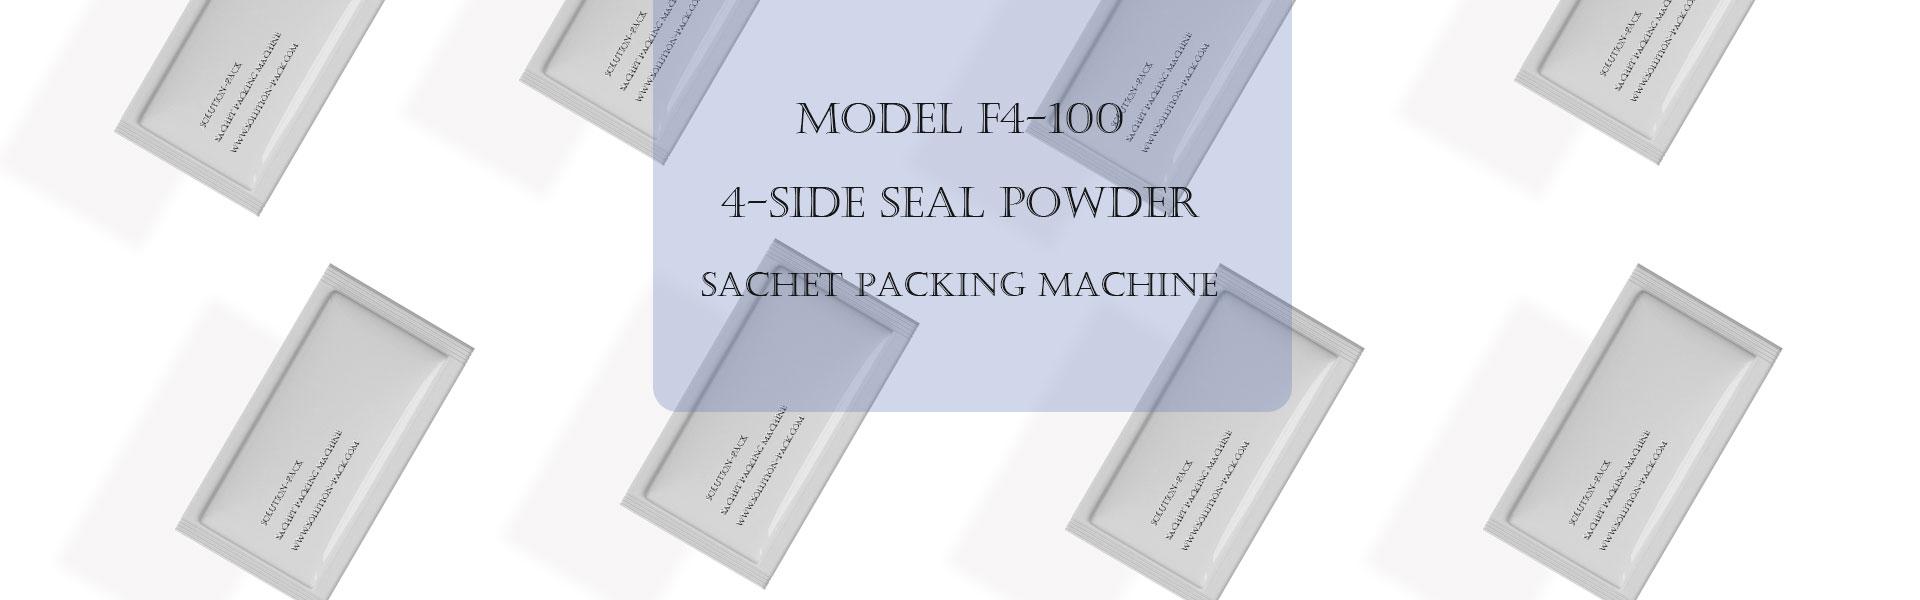 Solution-Pack | 4-Side Seal Powder Sachet Packing Machine | Sachet Packing Machine | Powder Sachet Packing Machine | Powder Sachet Filling Machine